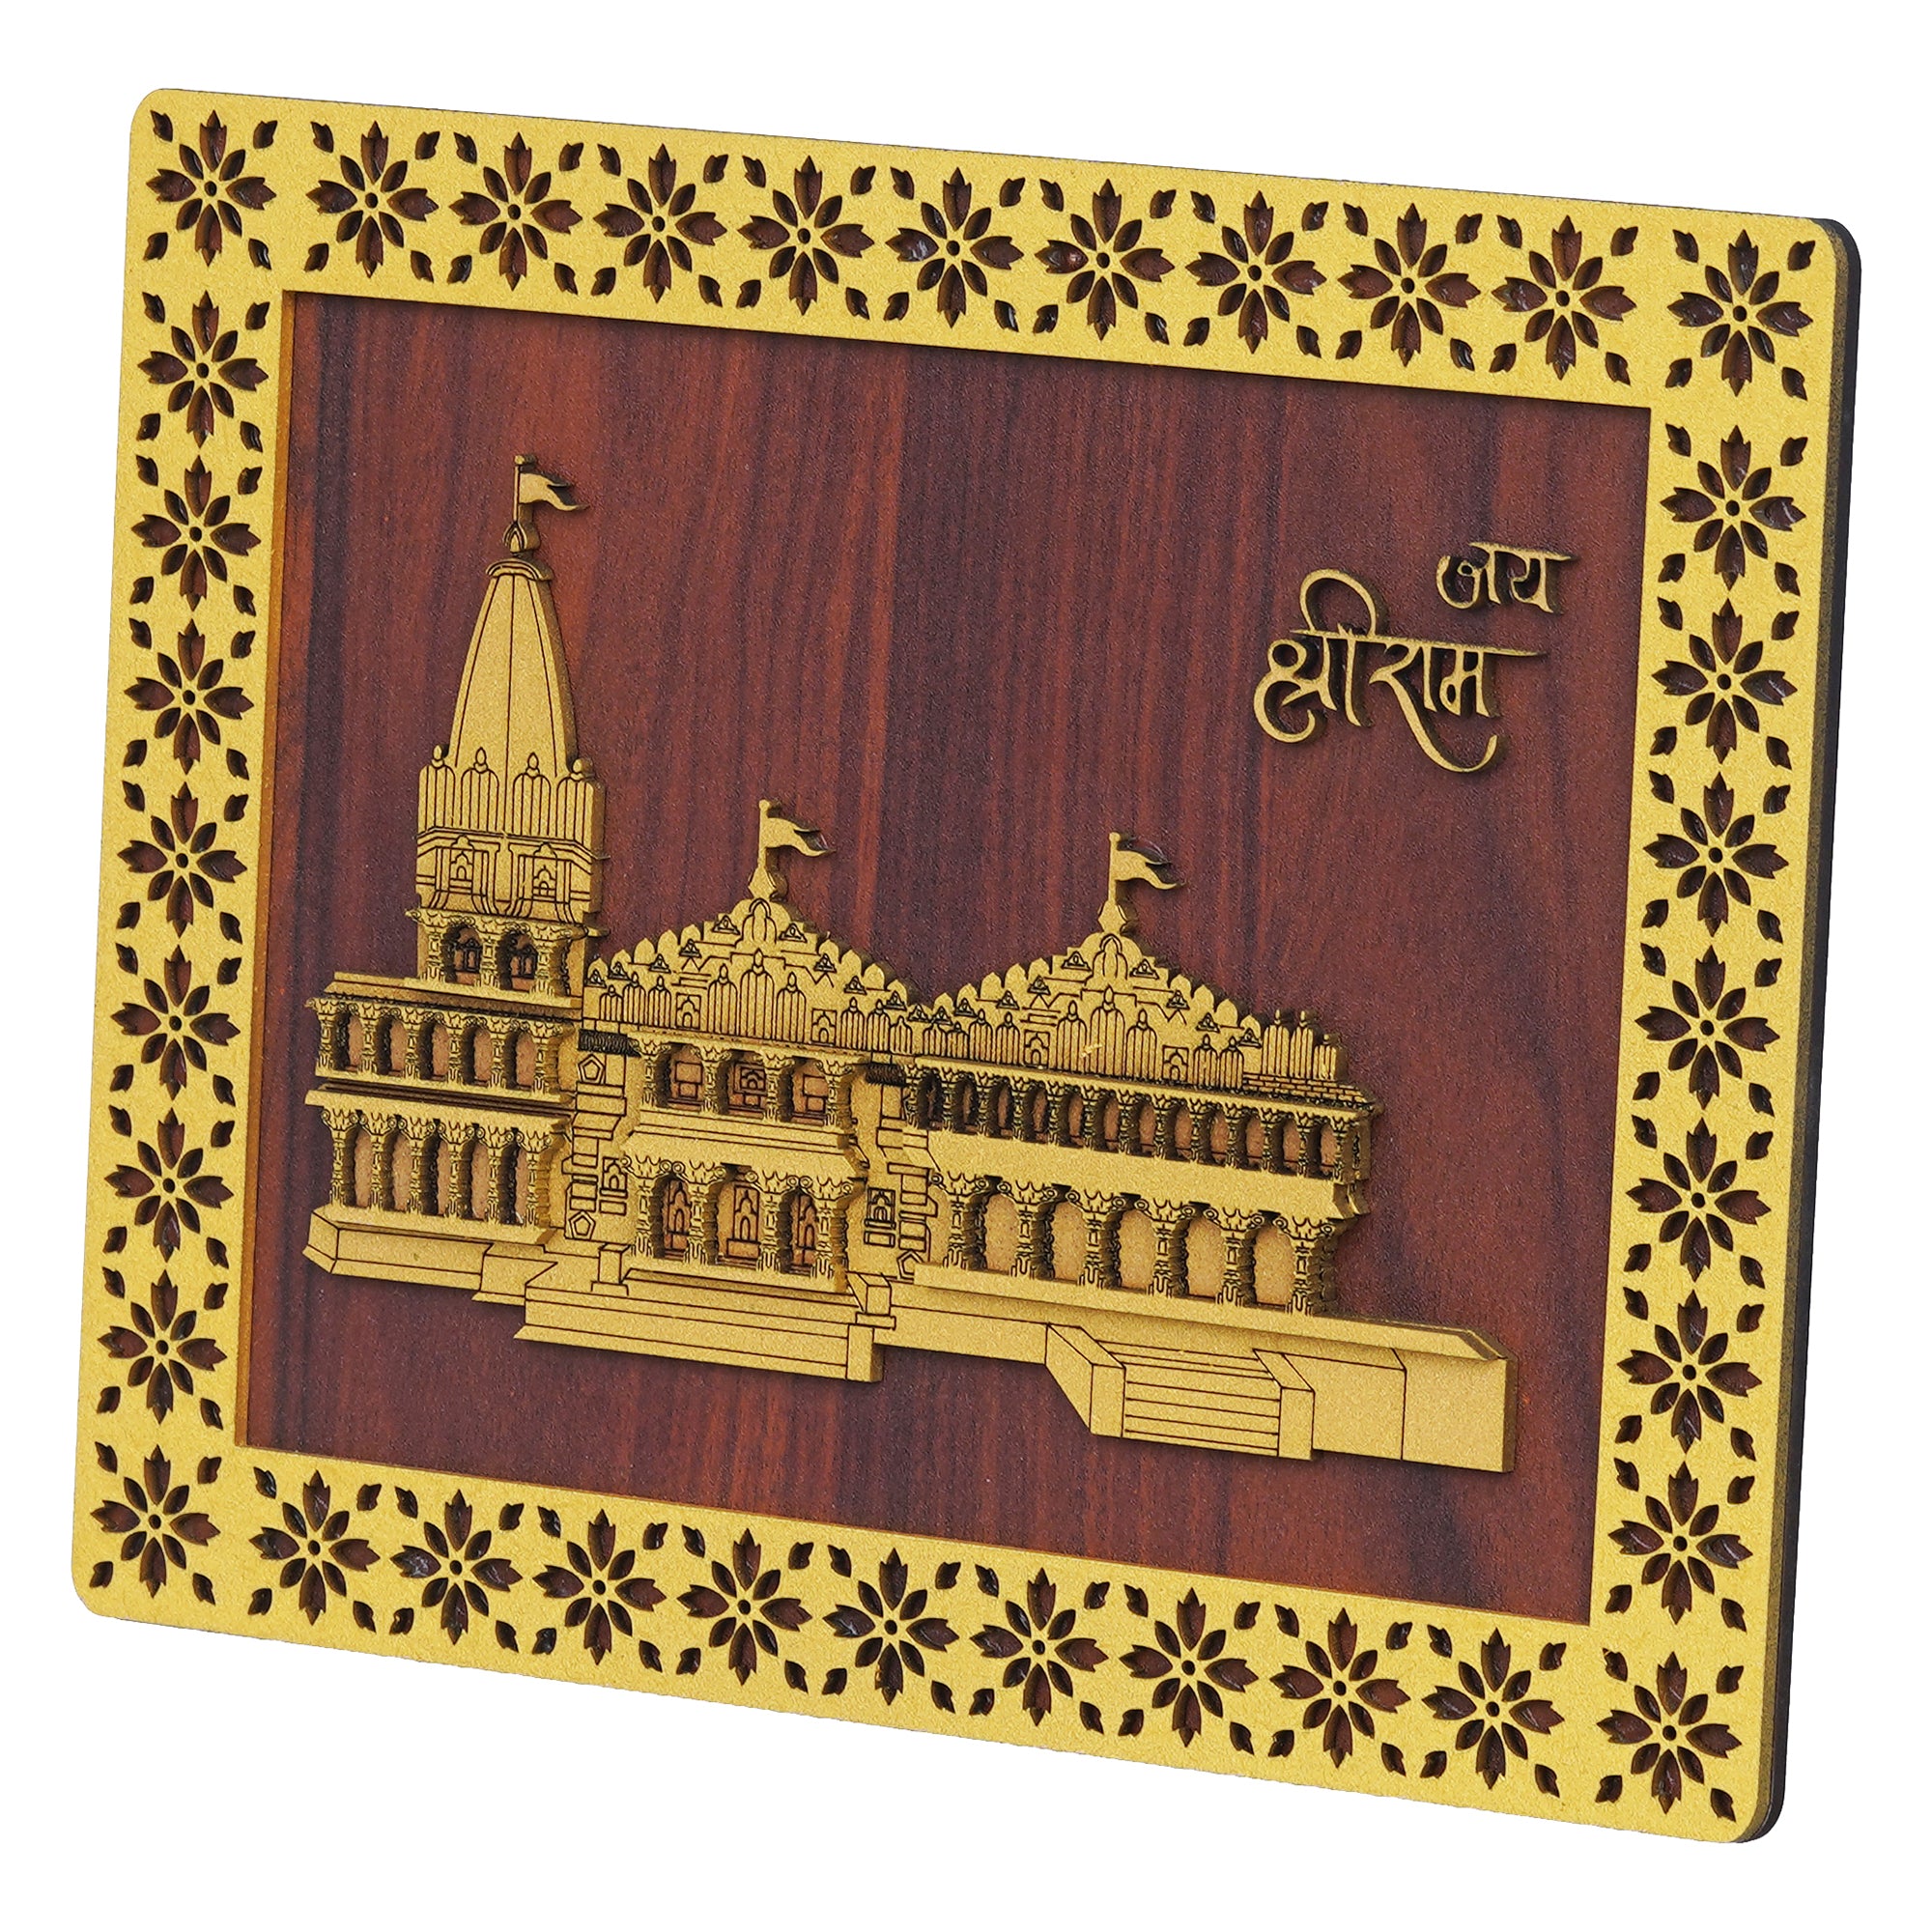 eCraftIndia Jai Shri Ram Mandir Ayodhya Decorative Wooden Frame - Religious Wall Hanging Showpiece for Home Decor, and Spiritual Gifting (Gold, Brown) 7